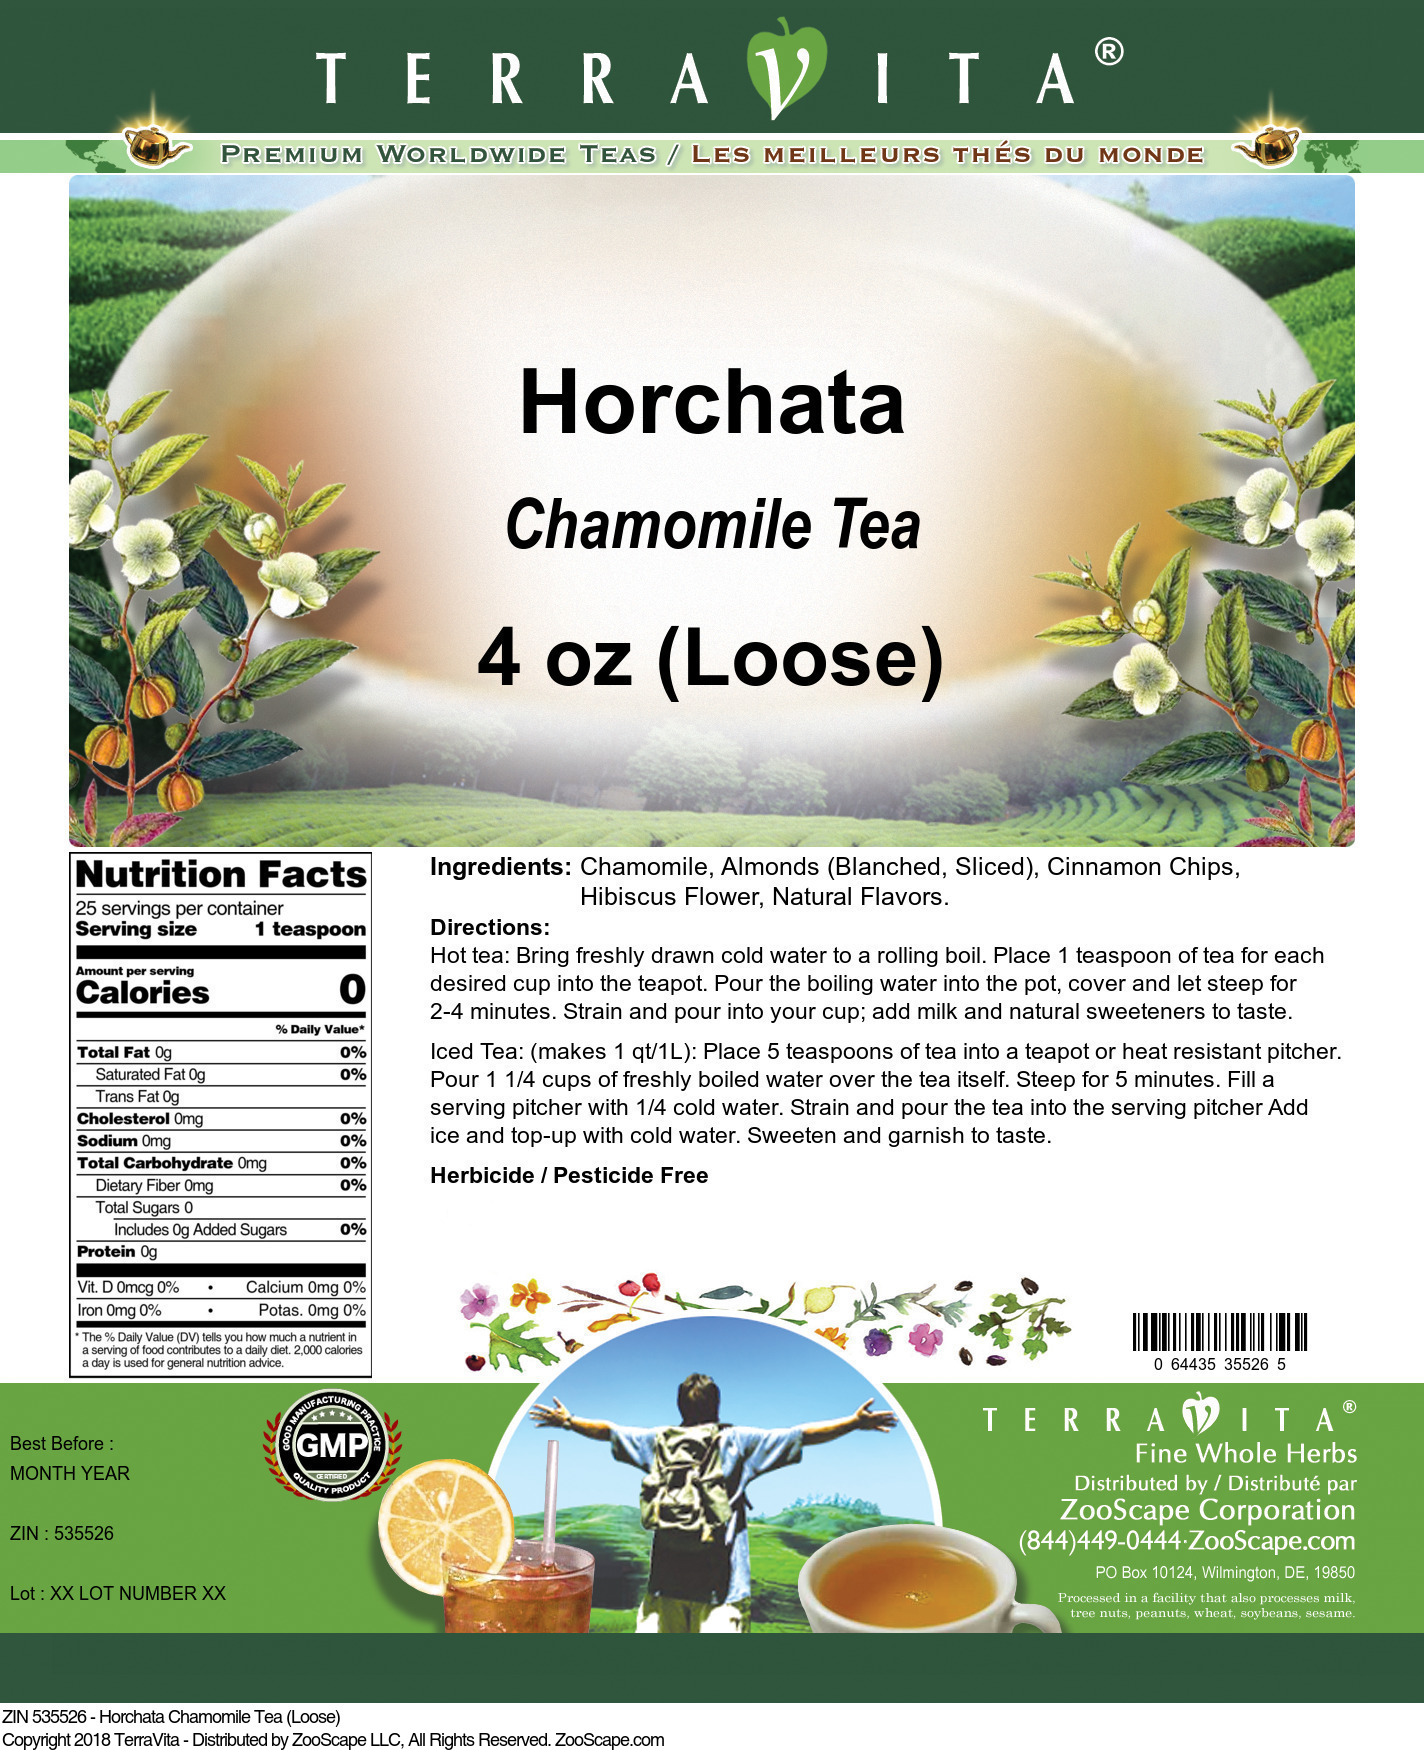 Horchata Chamomile Tea (Loose) - Label